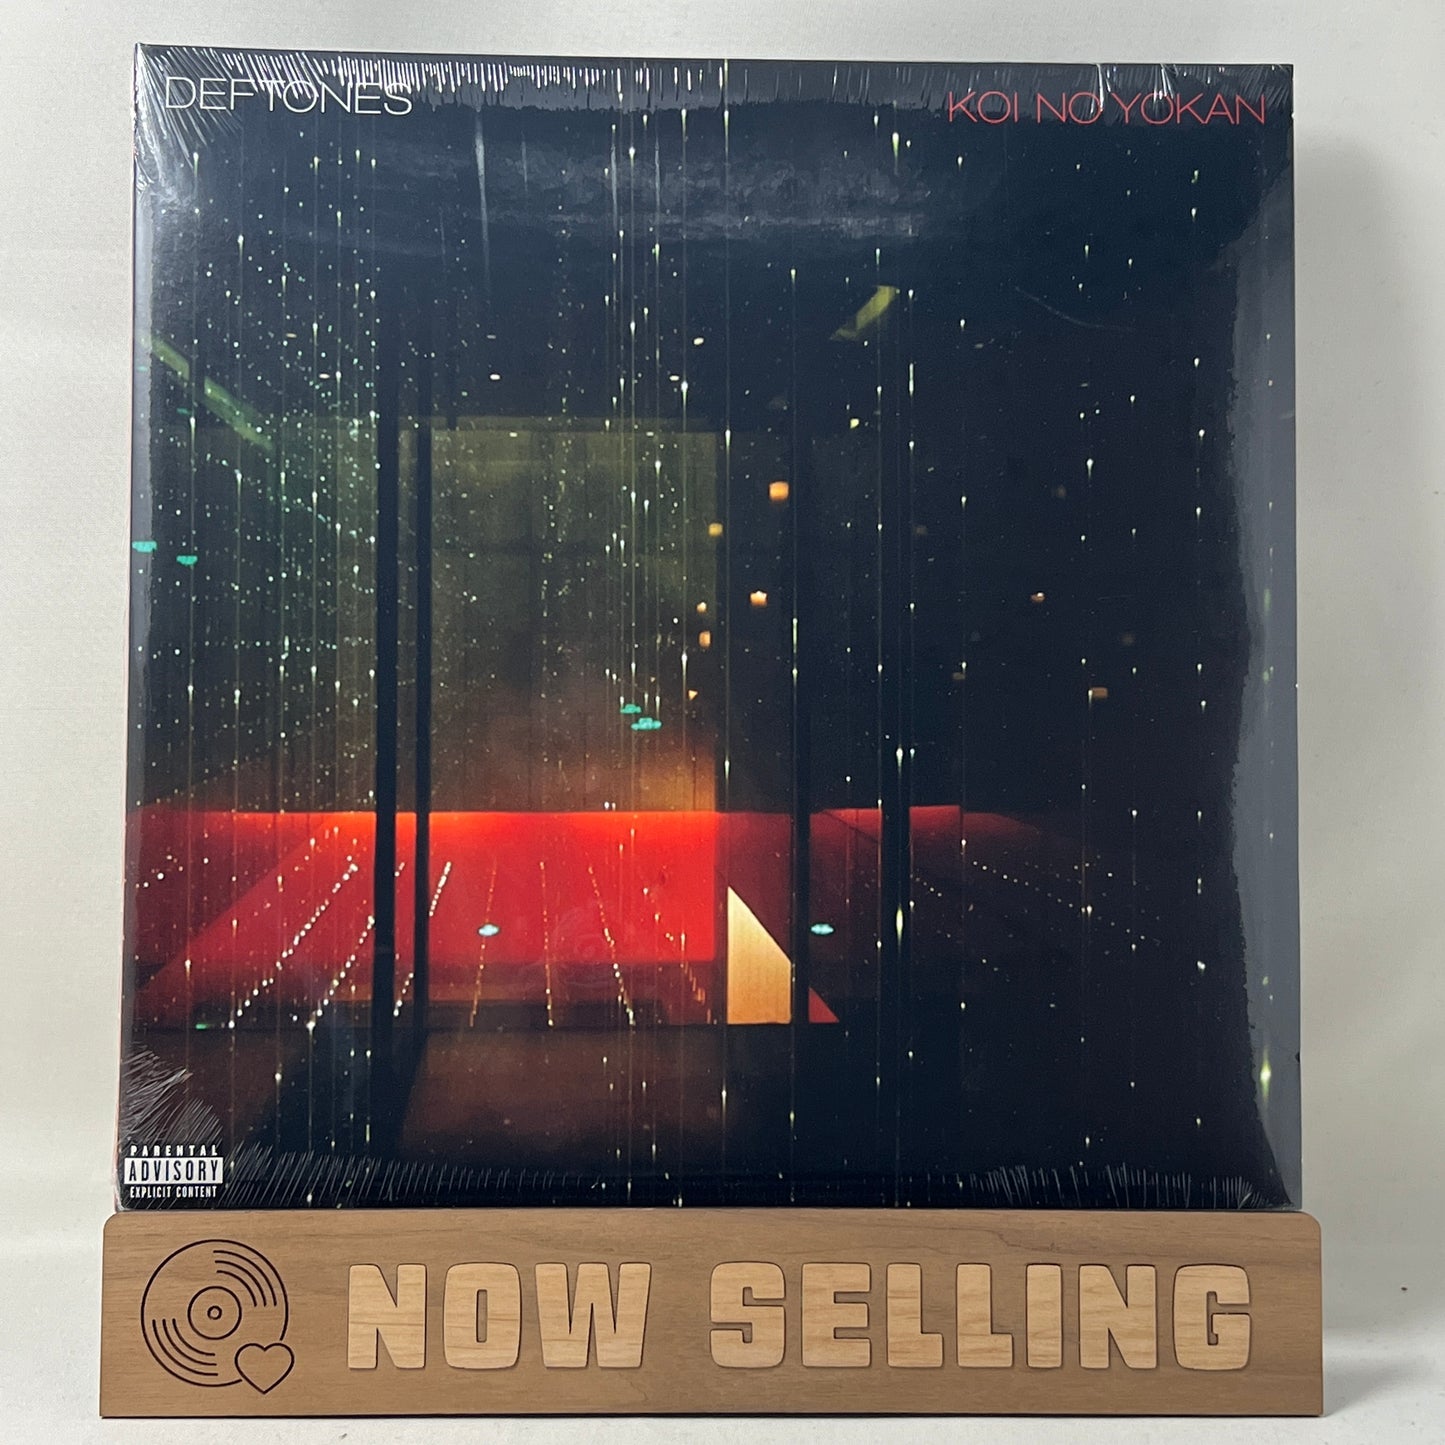 Deftones - Koi No Yokan Vinyl LP Reissue 180 Gram SEALED